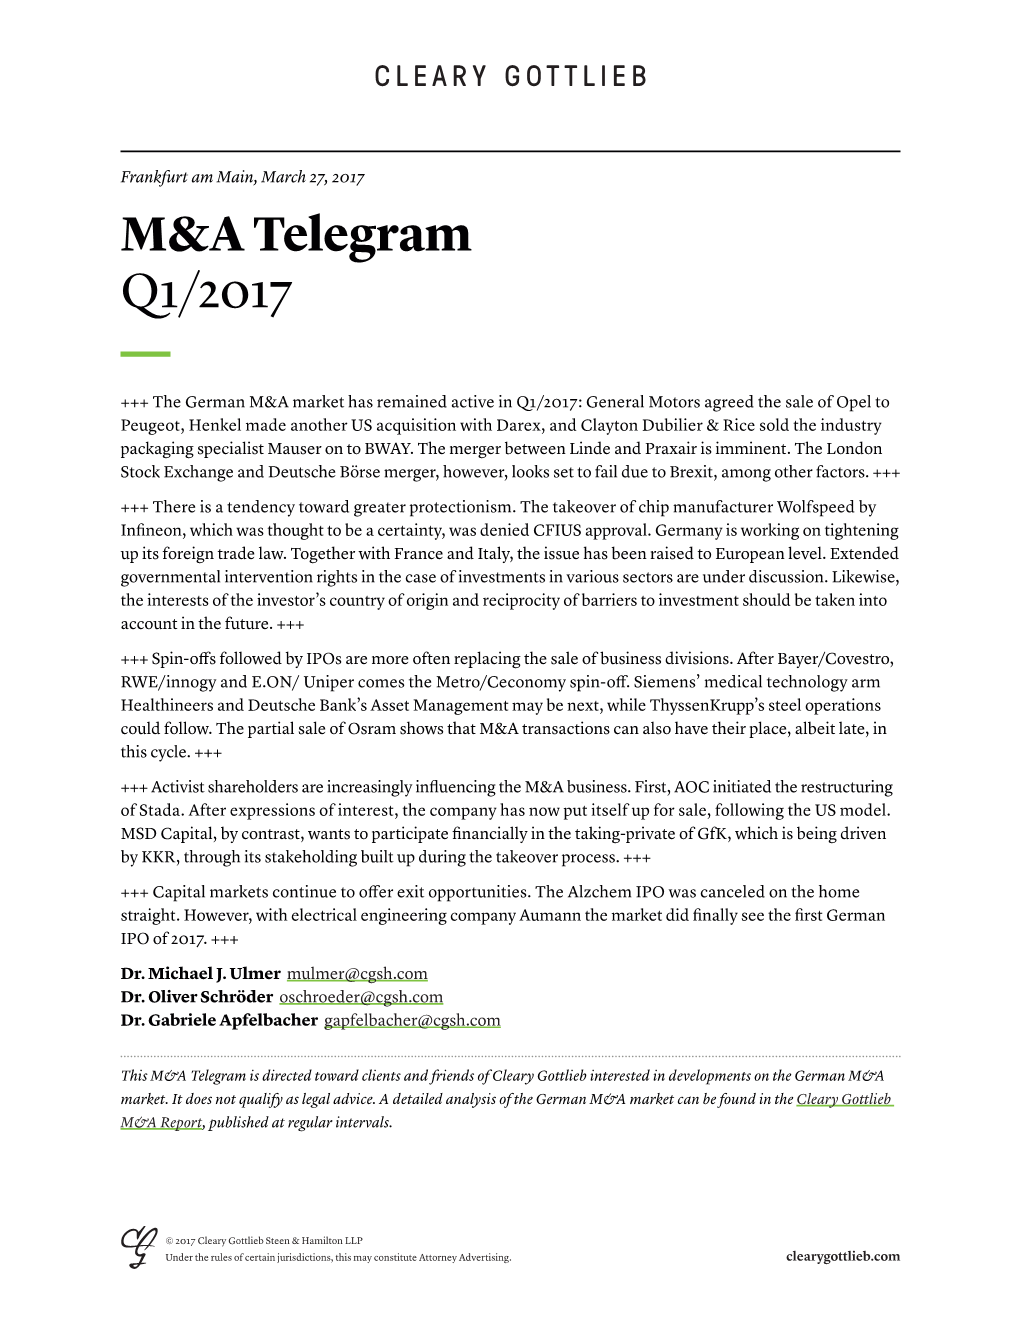 M&A-Telegram Q1/2017